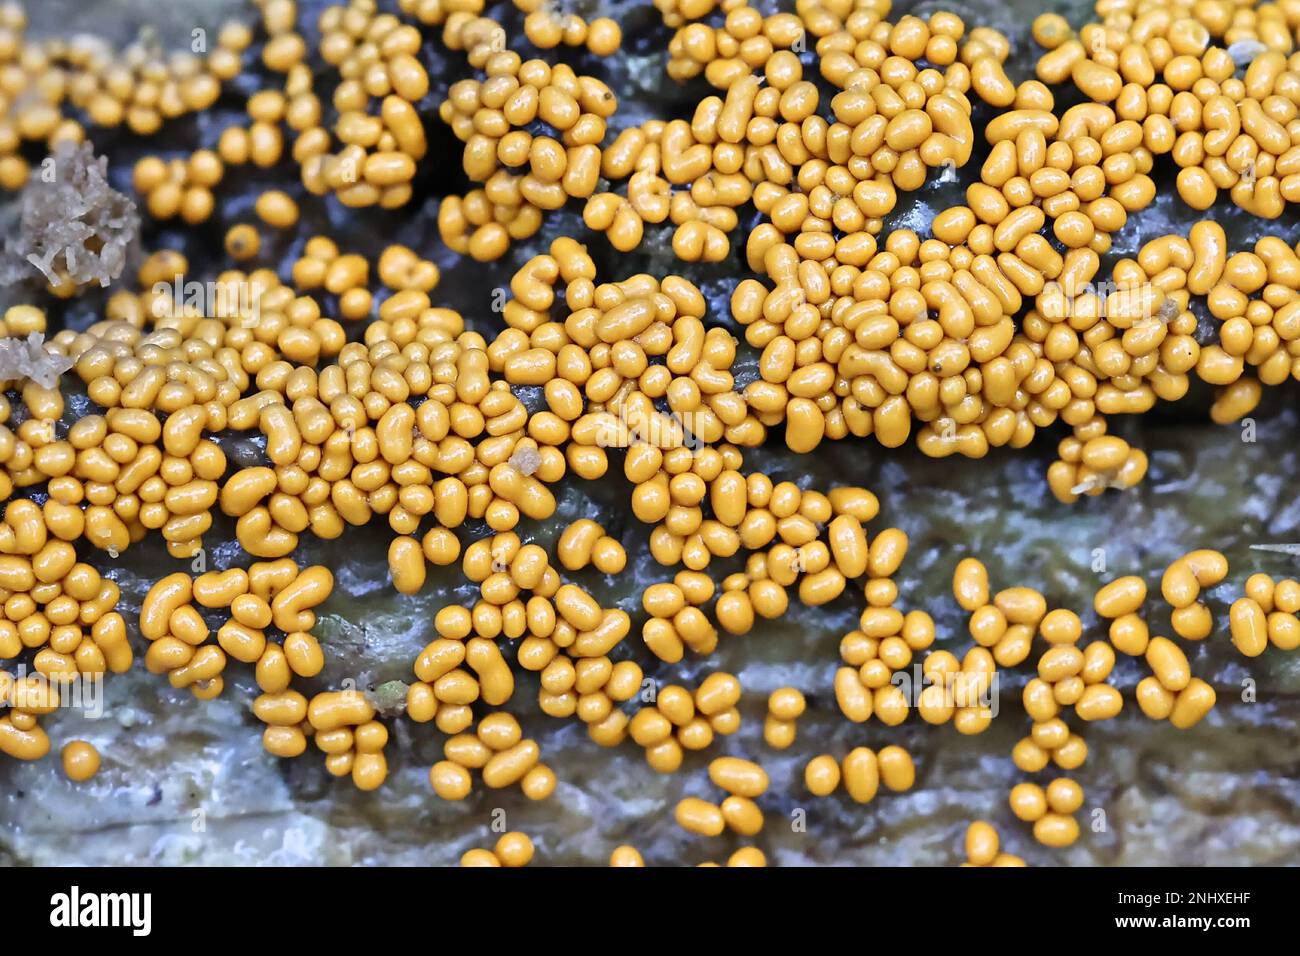 Trichia varia, slime mold from Finland, no common English name Stock Photo